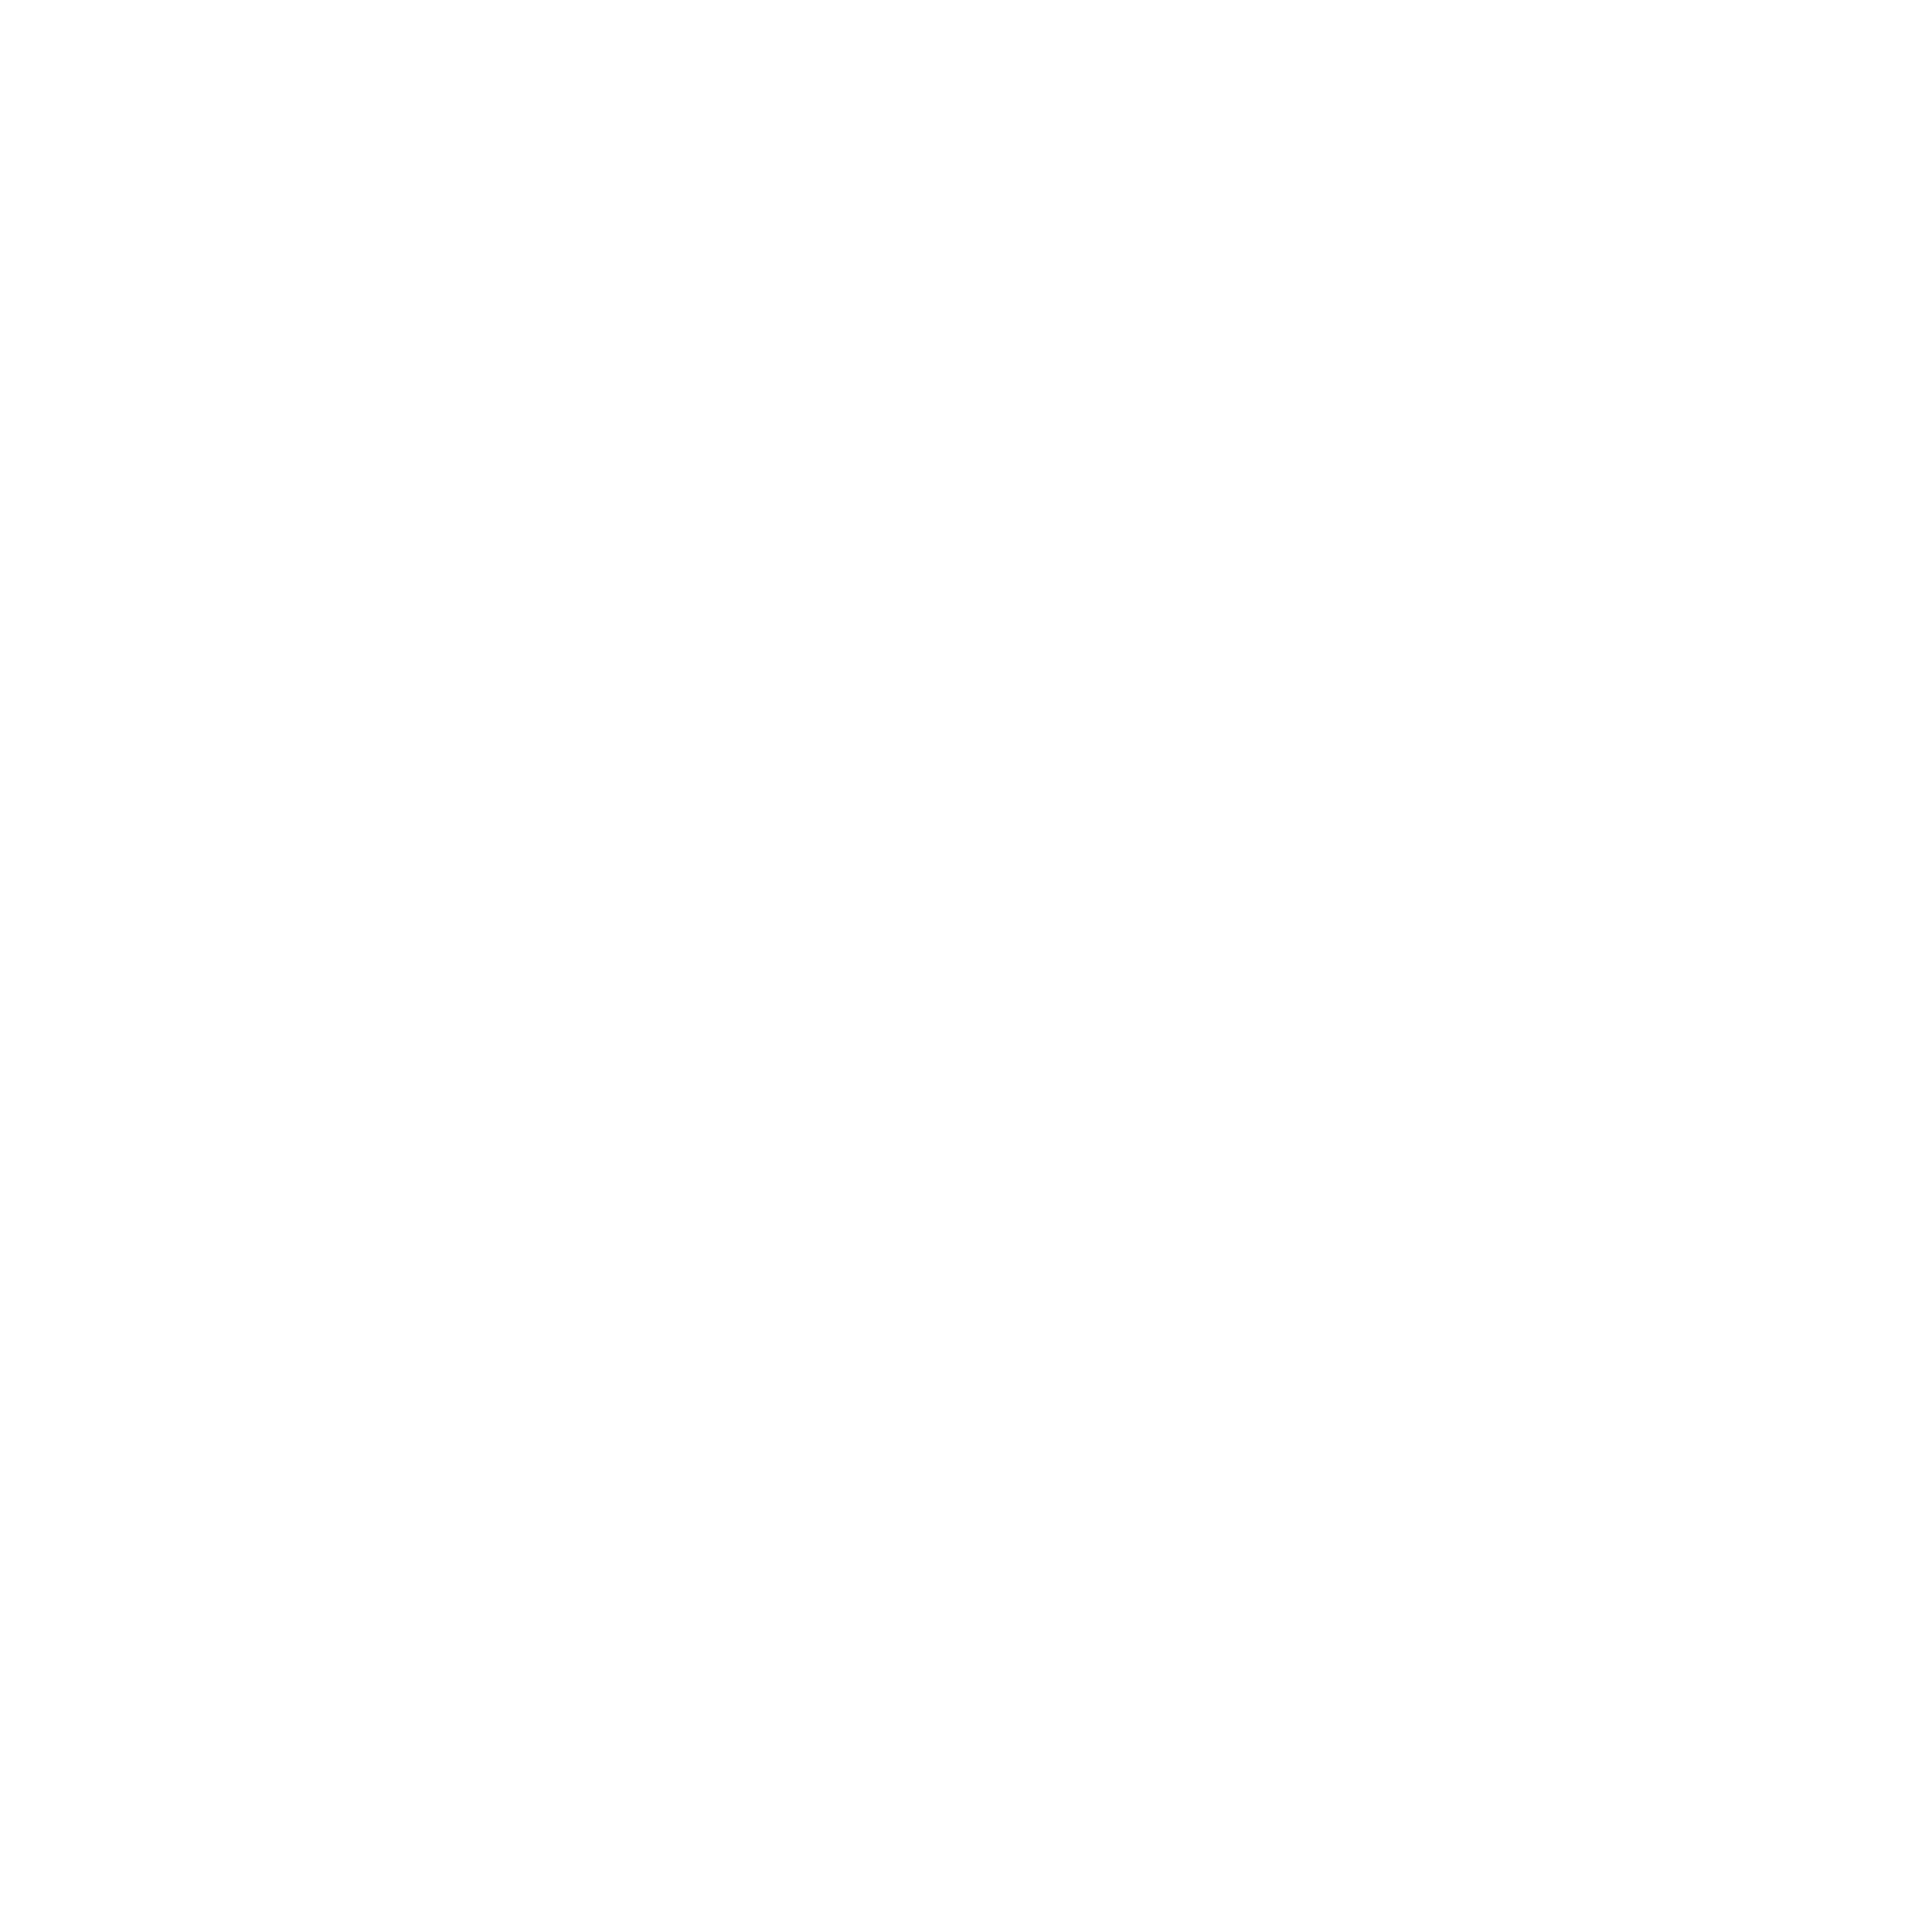 OryahhMusic